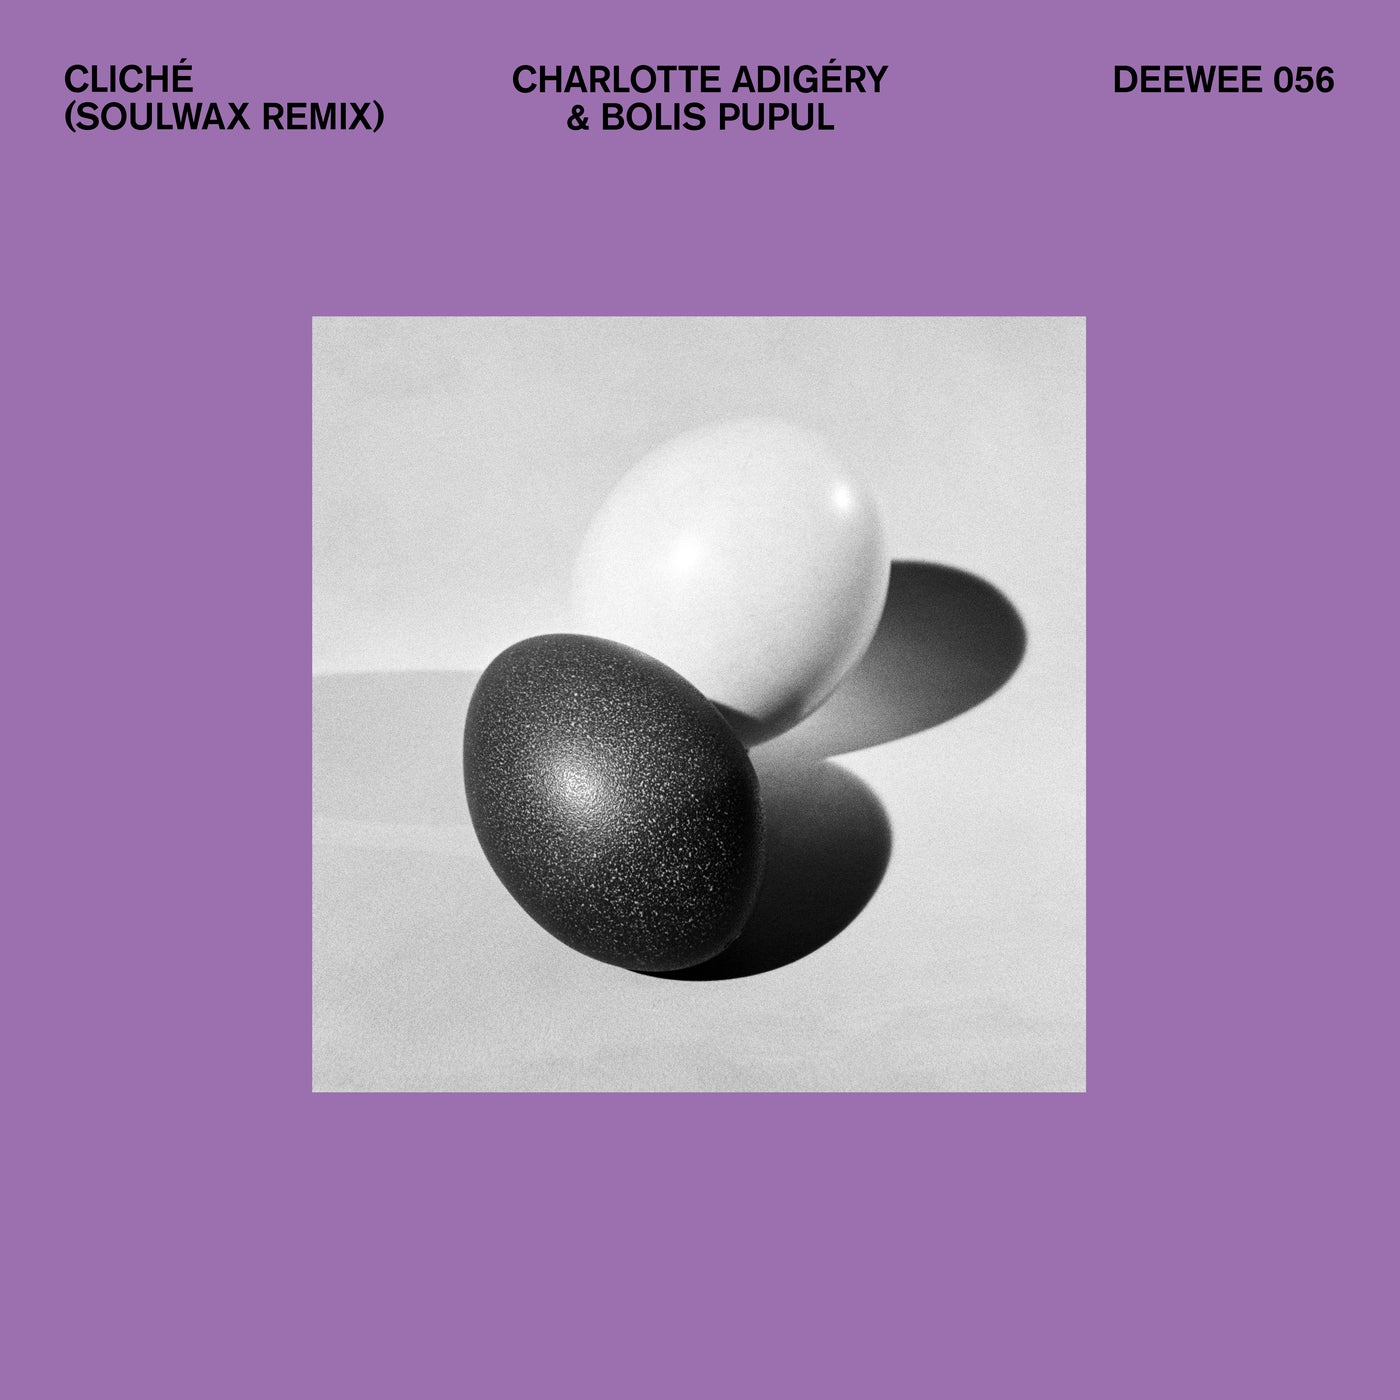 Cliche (Soulwax Remix)